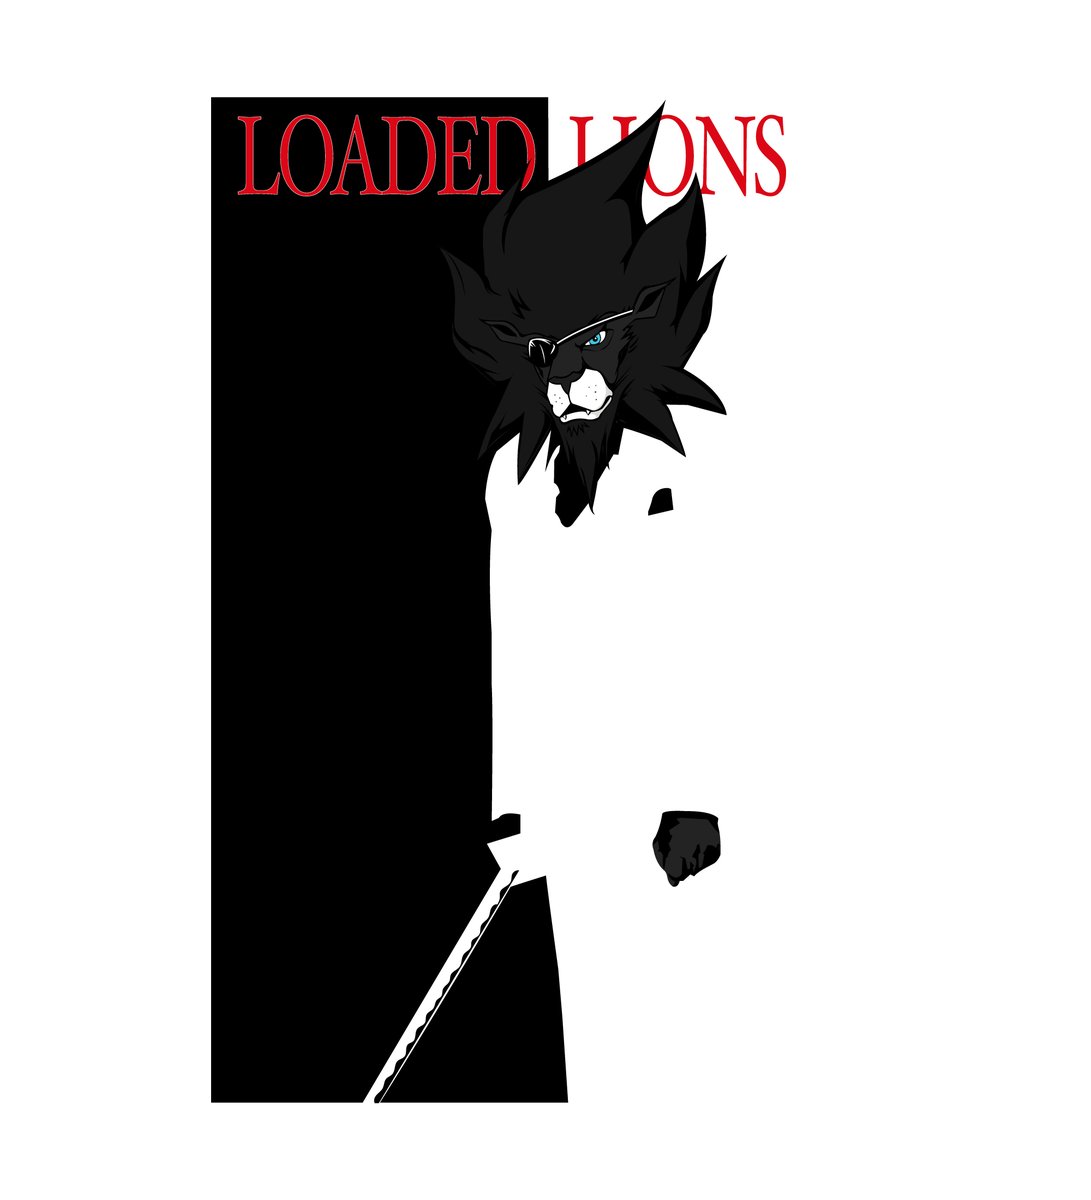 #CRO are here to stay #crofam #LoadedLions @LoadedLions_CDC @cryptocom @cronos_chain @Portalcoin  #LionsTogether
Ready for battle ?
x.com/johnnny9349673…